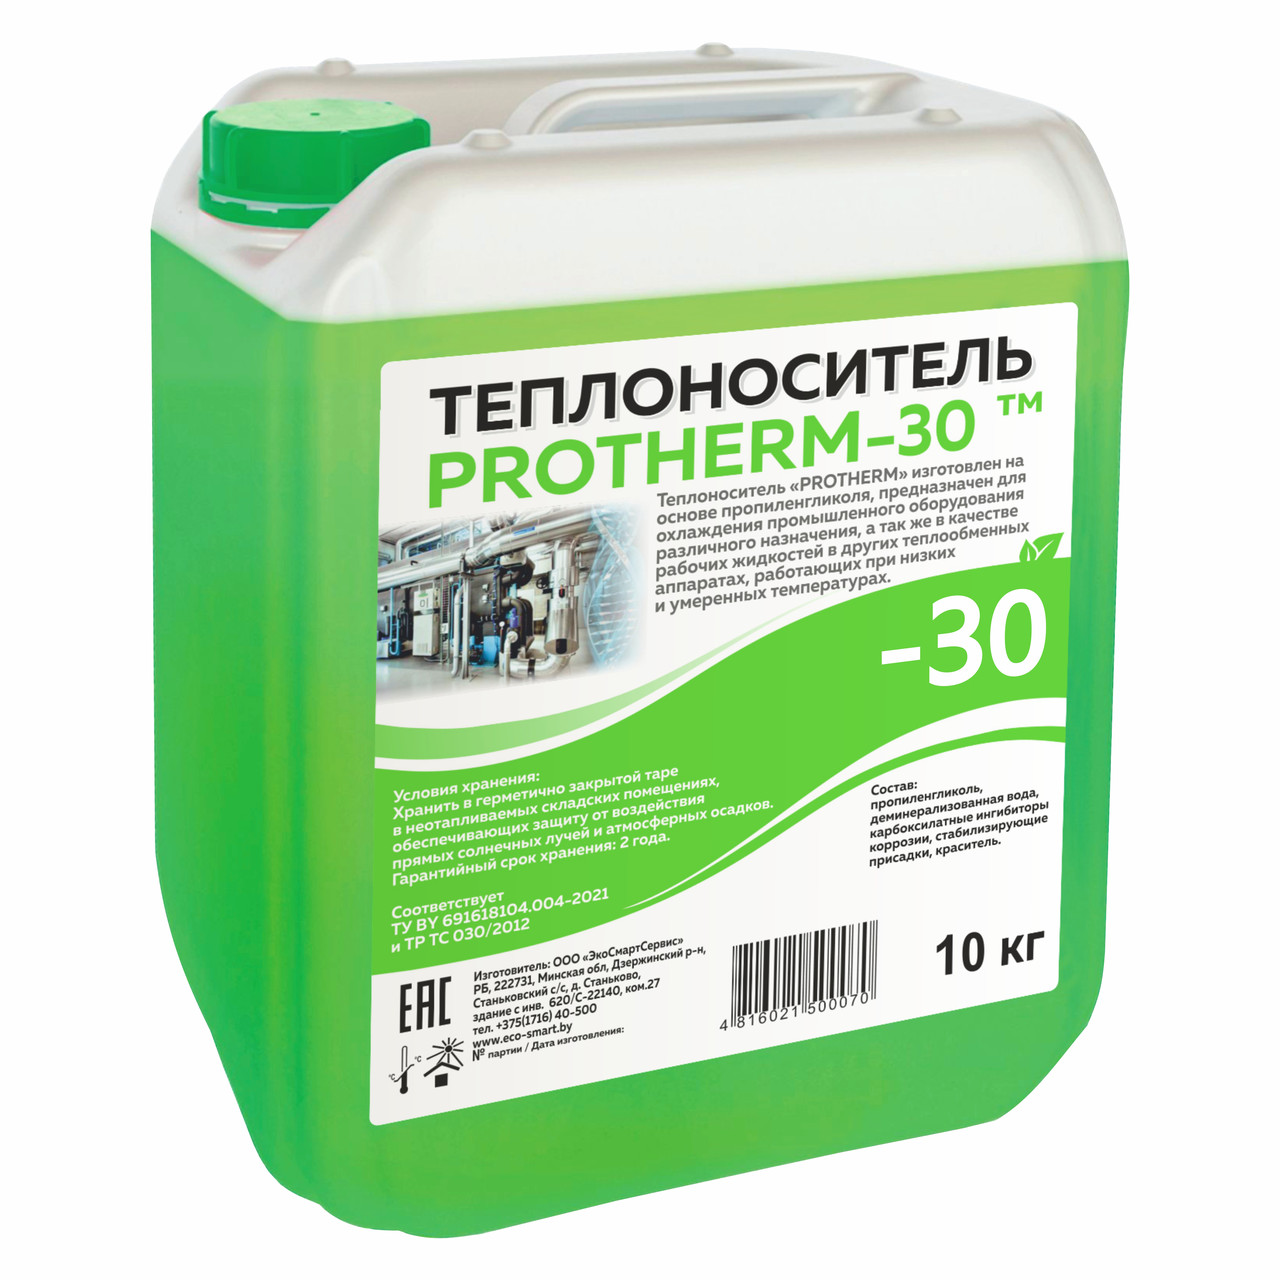 Теплоноситель Protherm-30, 10 кг